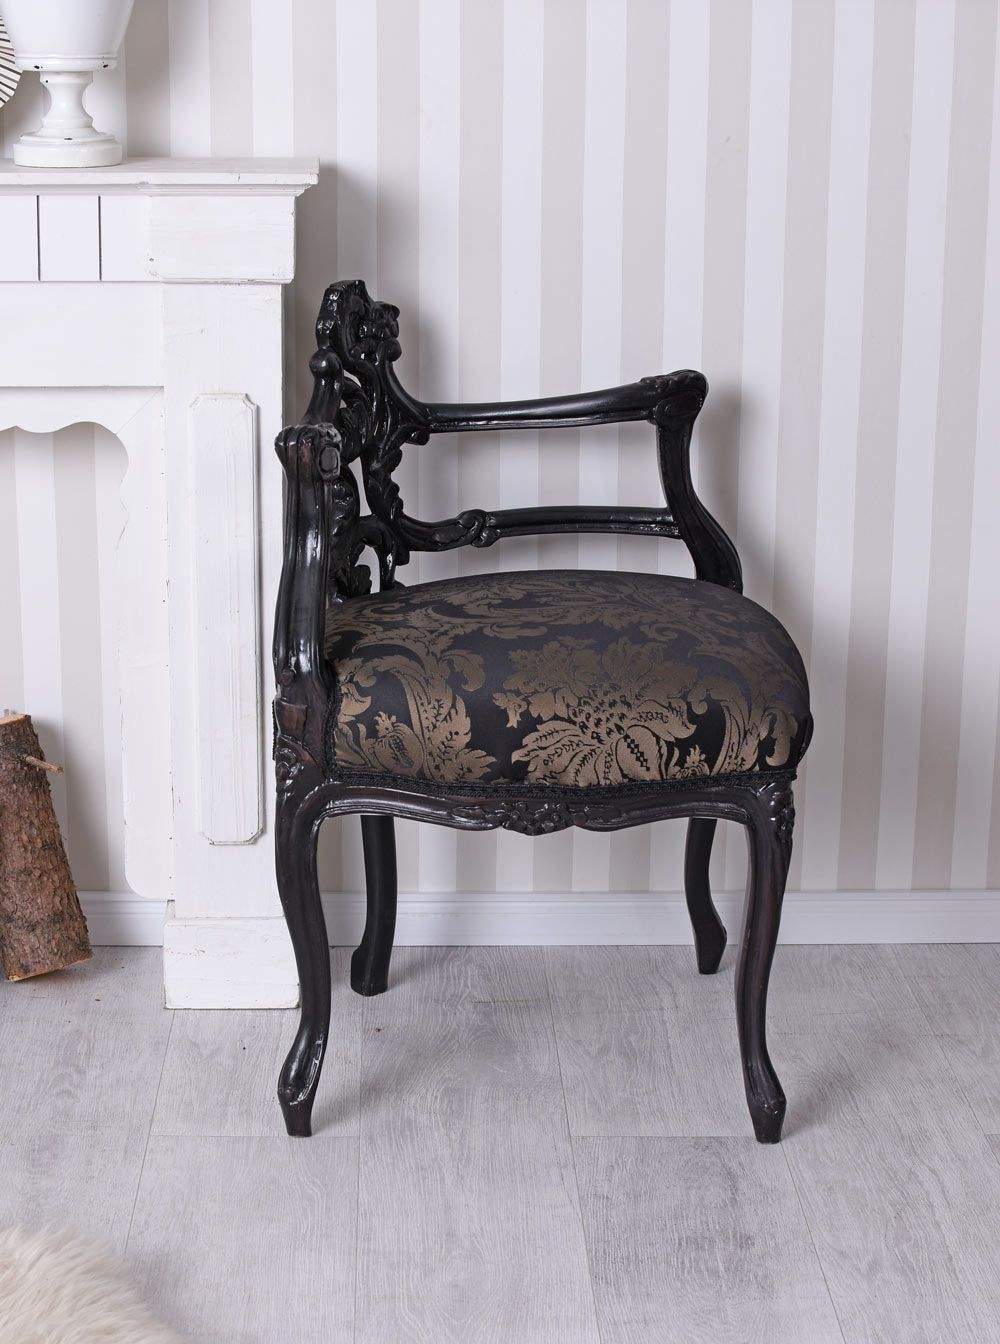 stuhl antik ebay kleinanzeigen eckstuhl antik lehnstuhl schminktisch hocker polsterstuhl stuhl neu